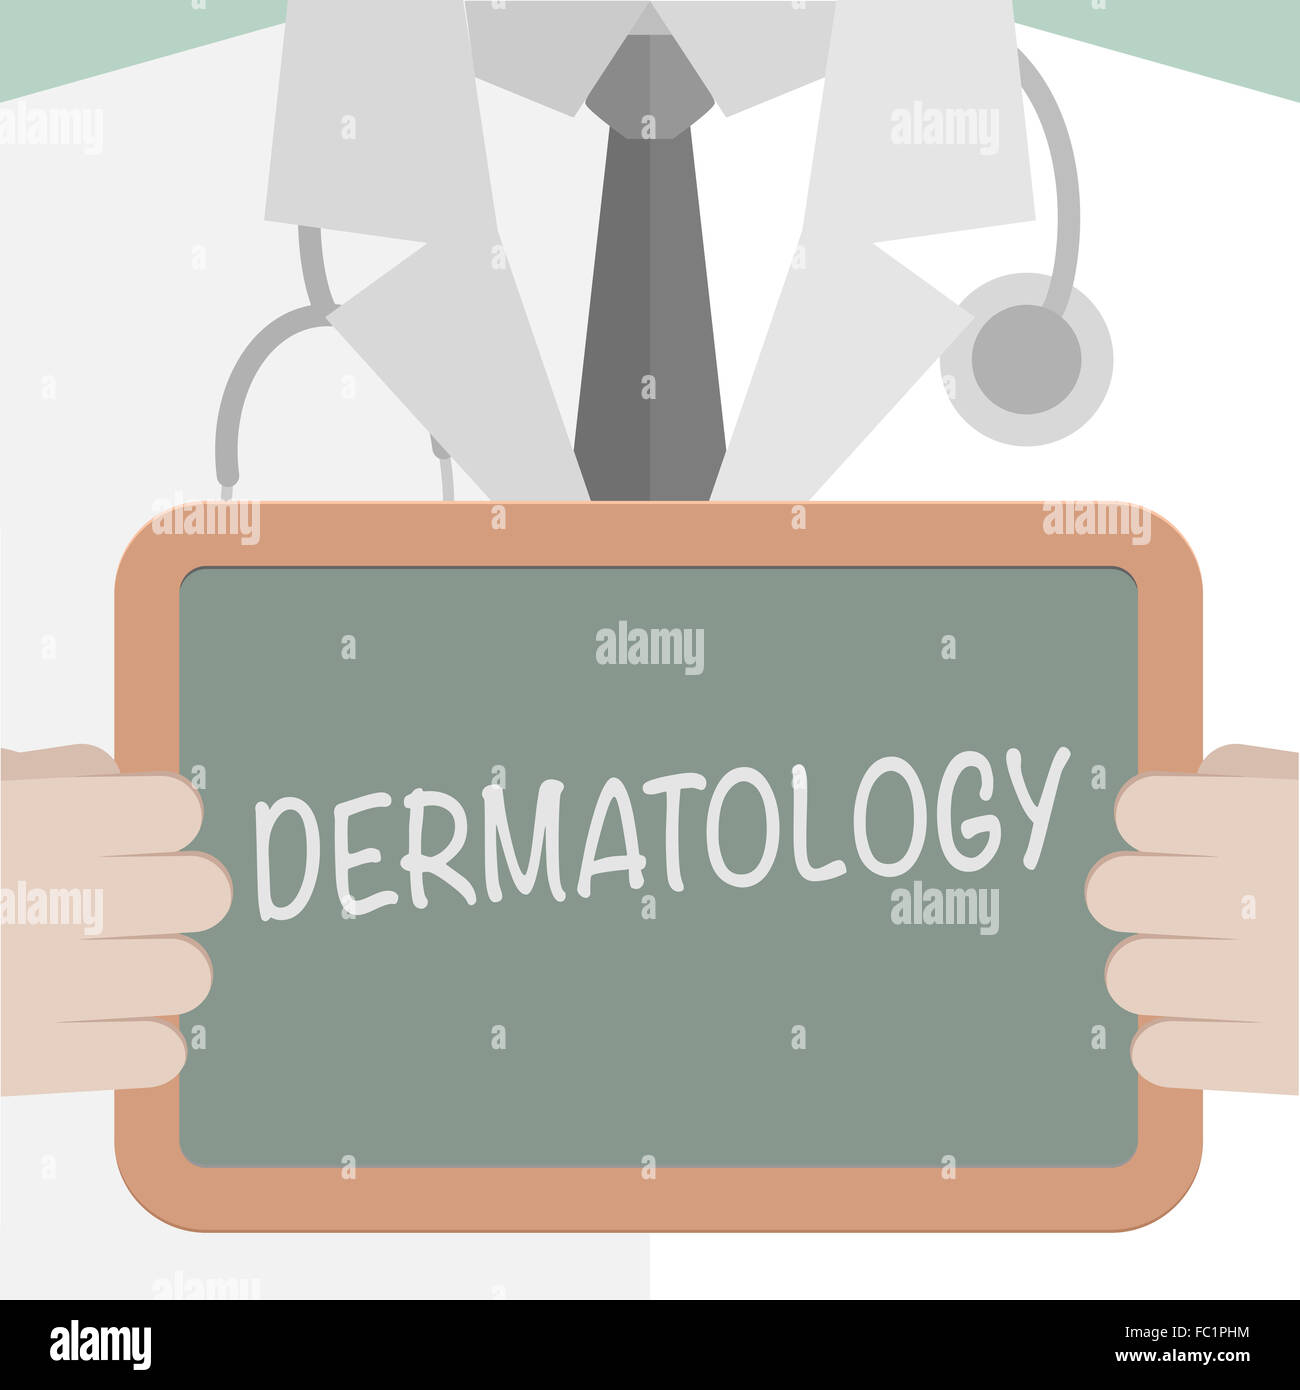 Medical Board Dermatology Stock Photo